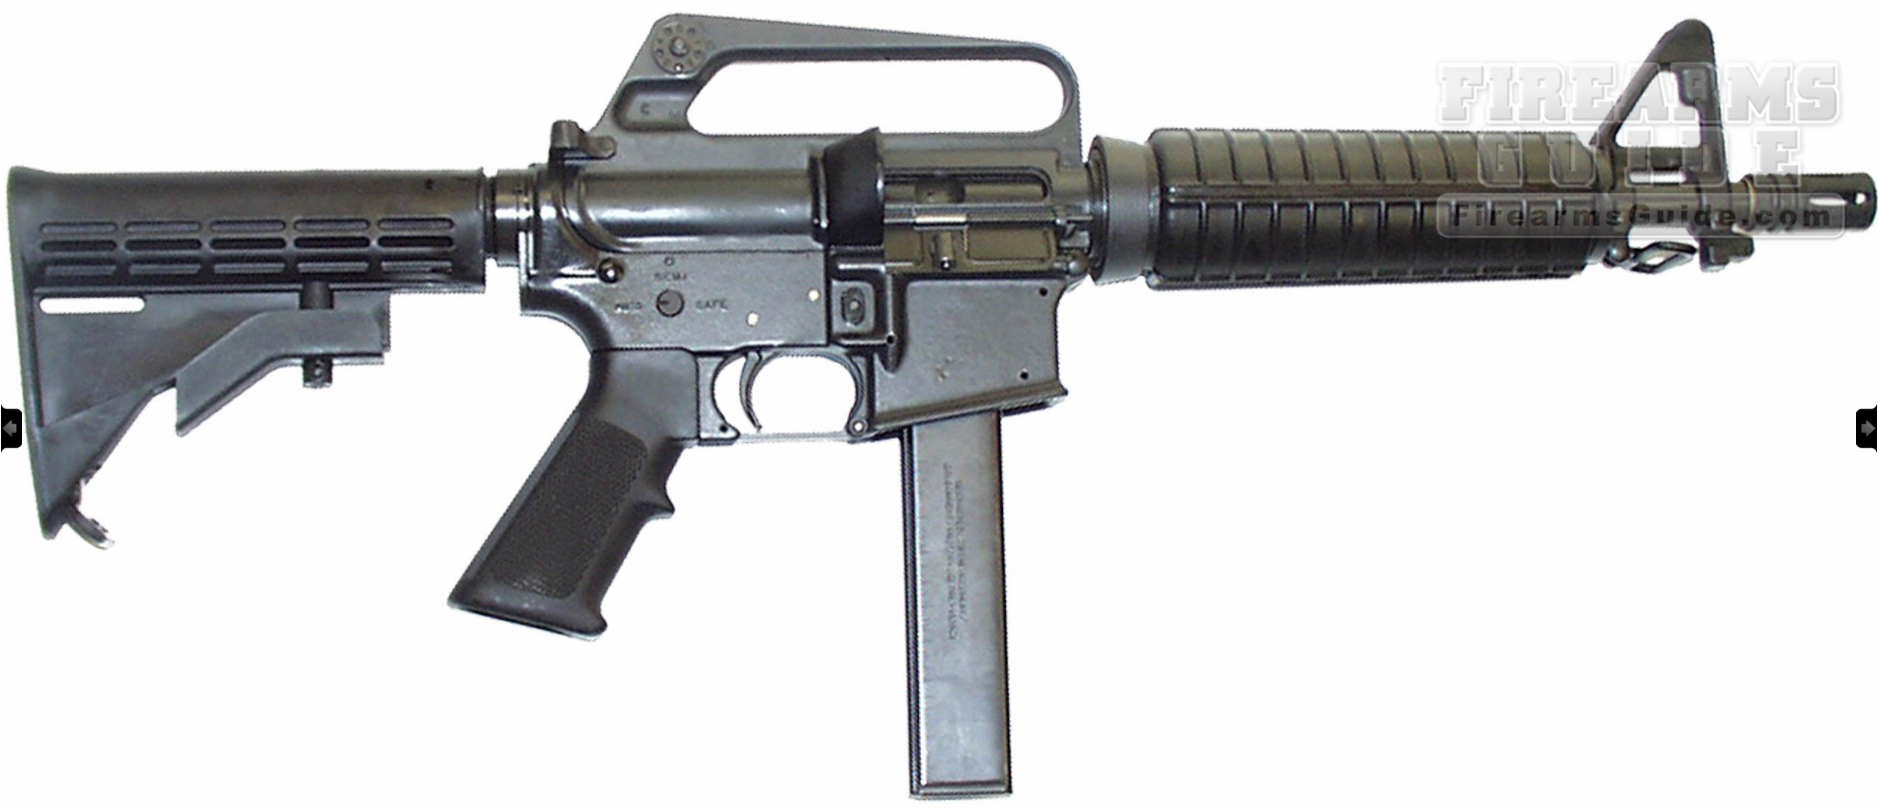 Colt 9mm Submachine Gun